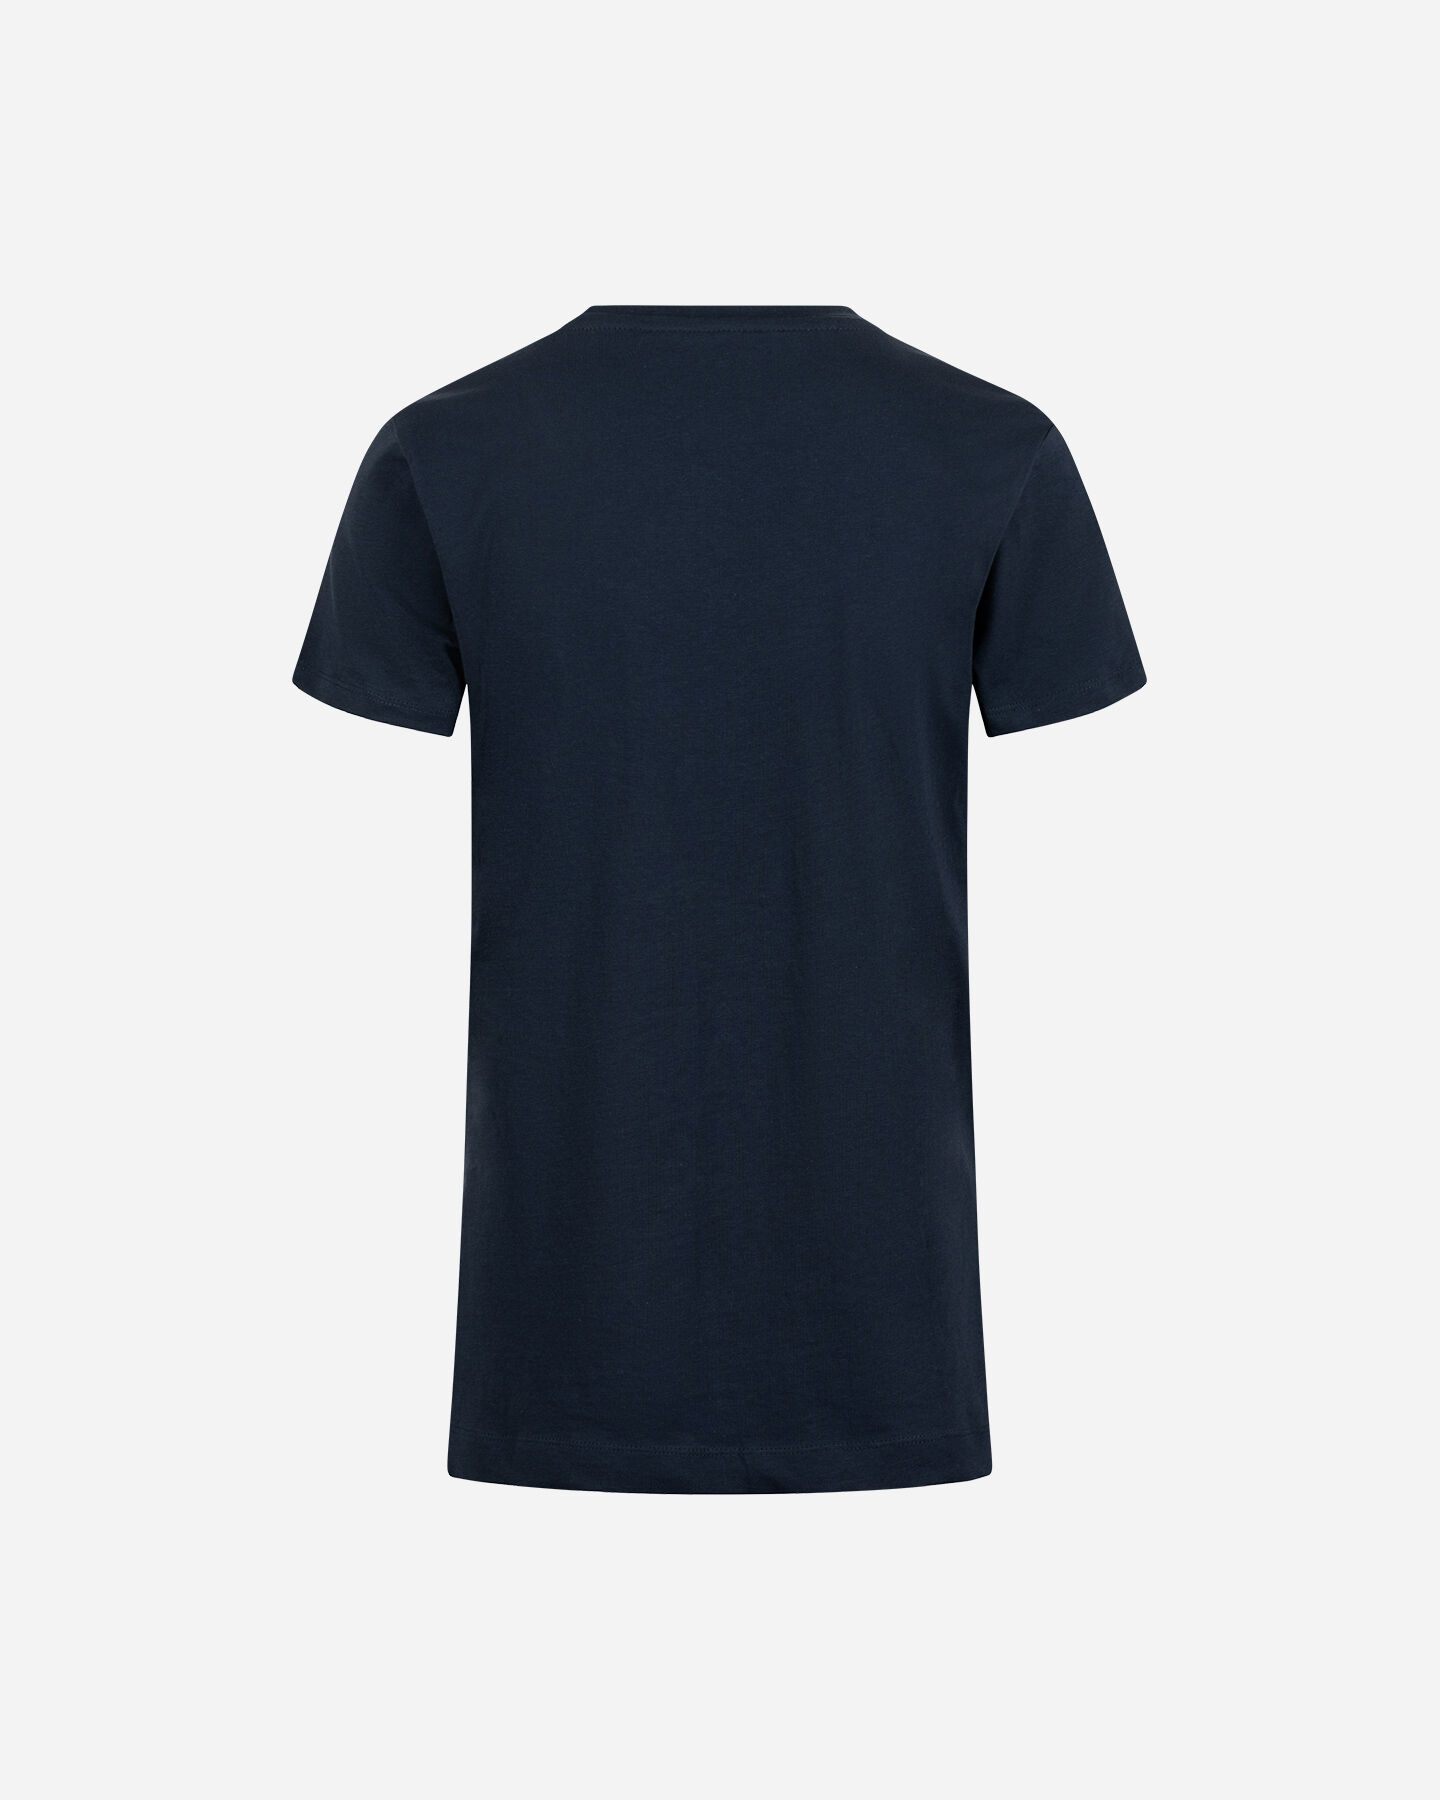  T-Shirt FREDDY SMALL LOGO W S5679036|B94-|XS scatto 1